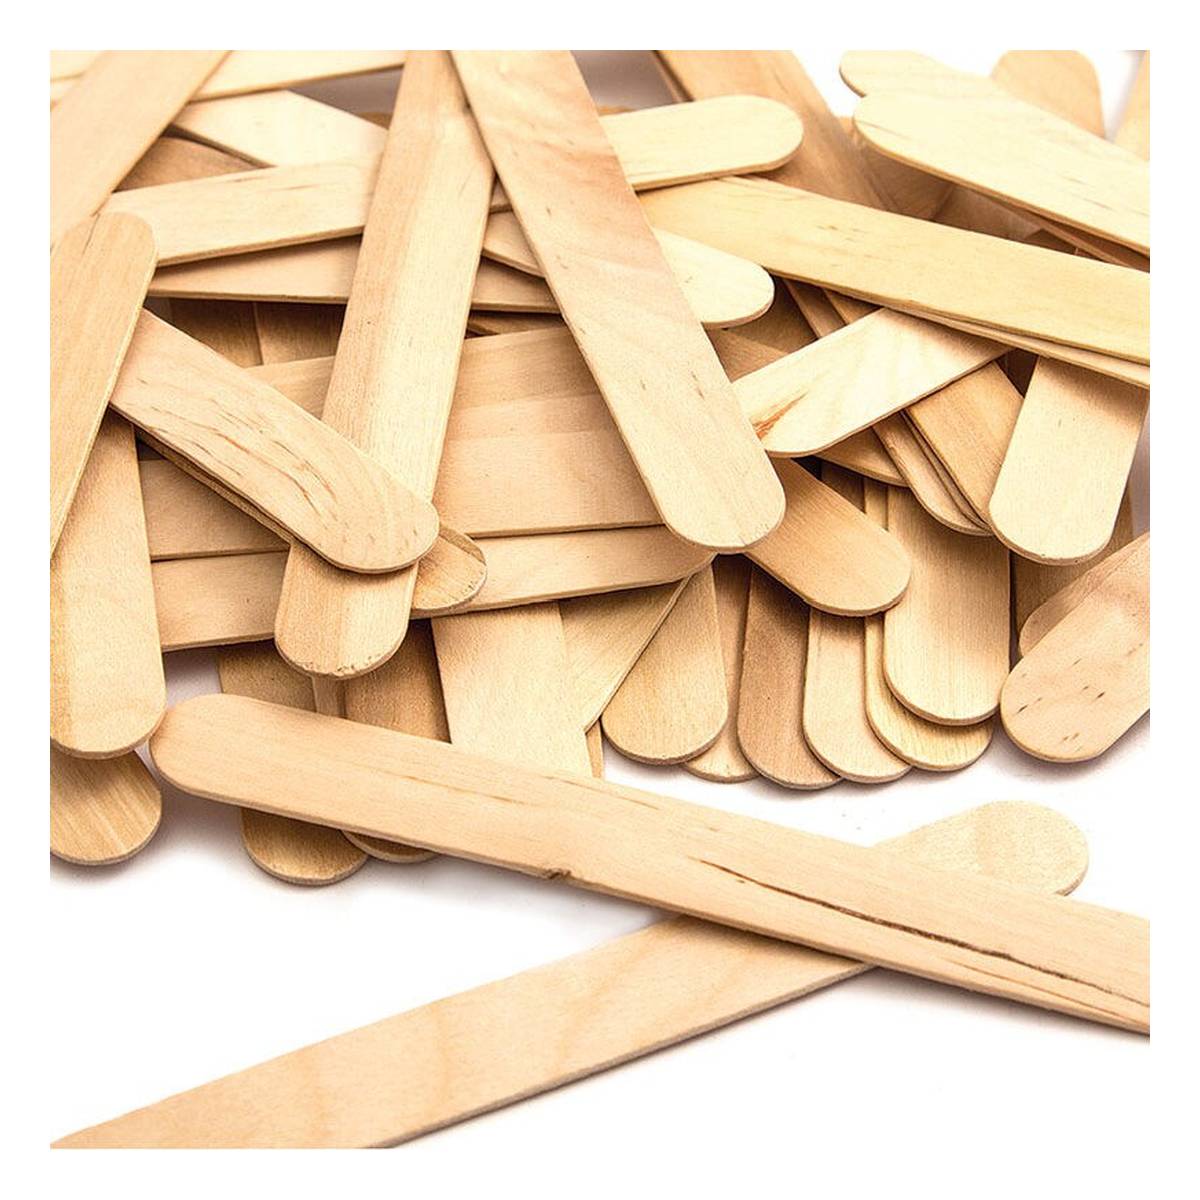 Comfy Package Popsicle Sticks Multipurpose Wooden Sticks for